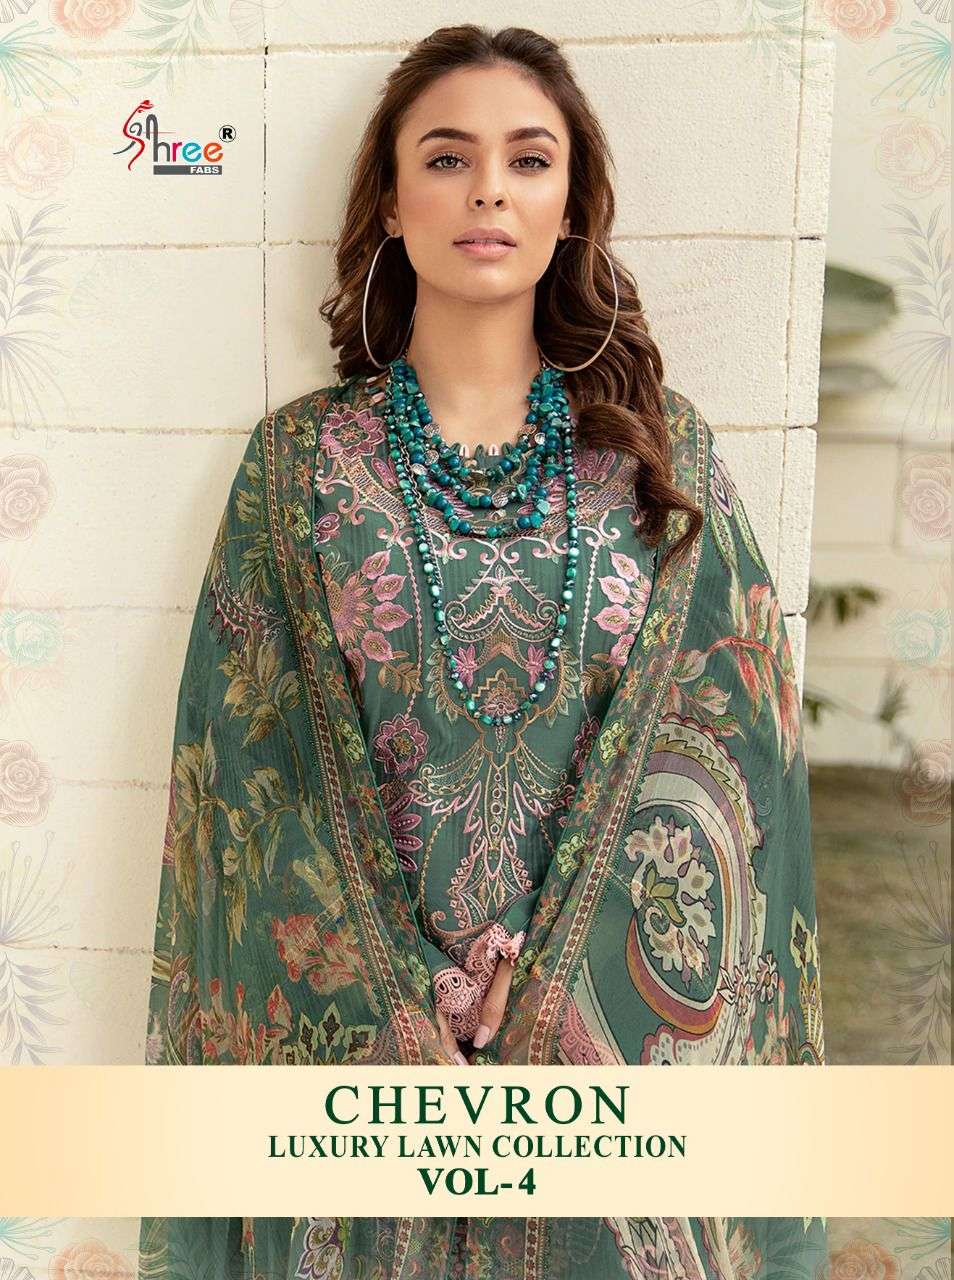 shree fabs chevron luxury lawn vol 4 cotton pakistani dresses